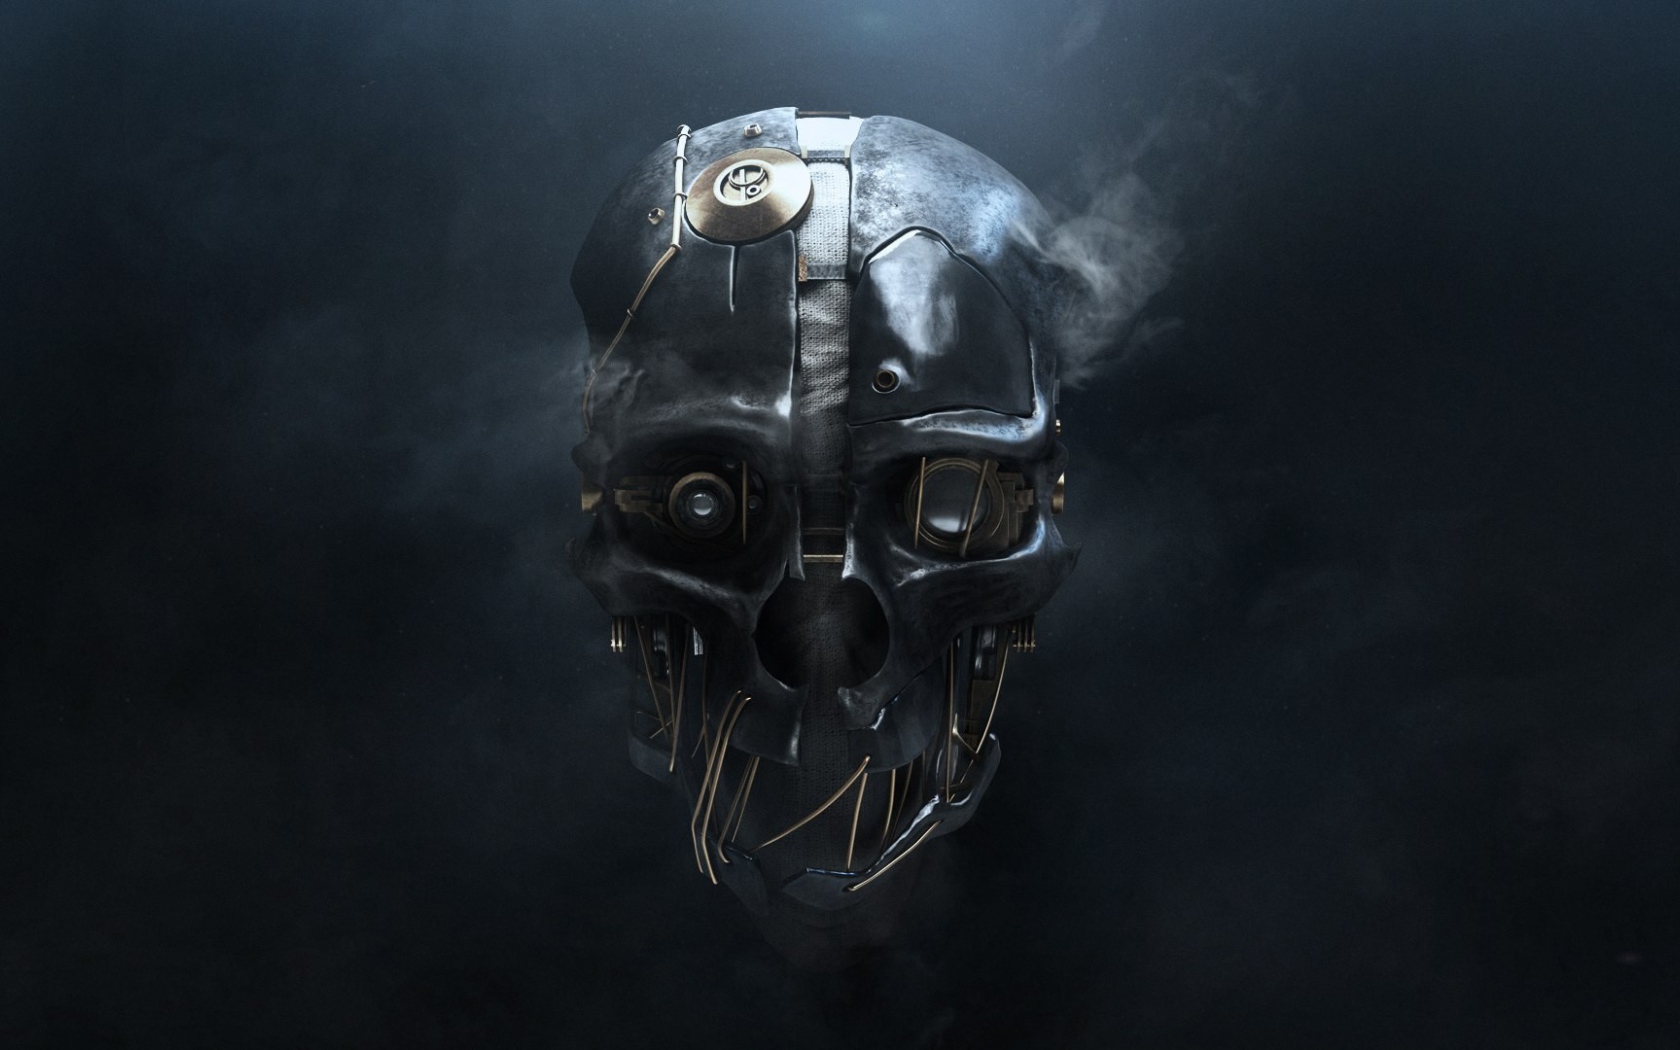 Skull robot made of iron